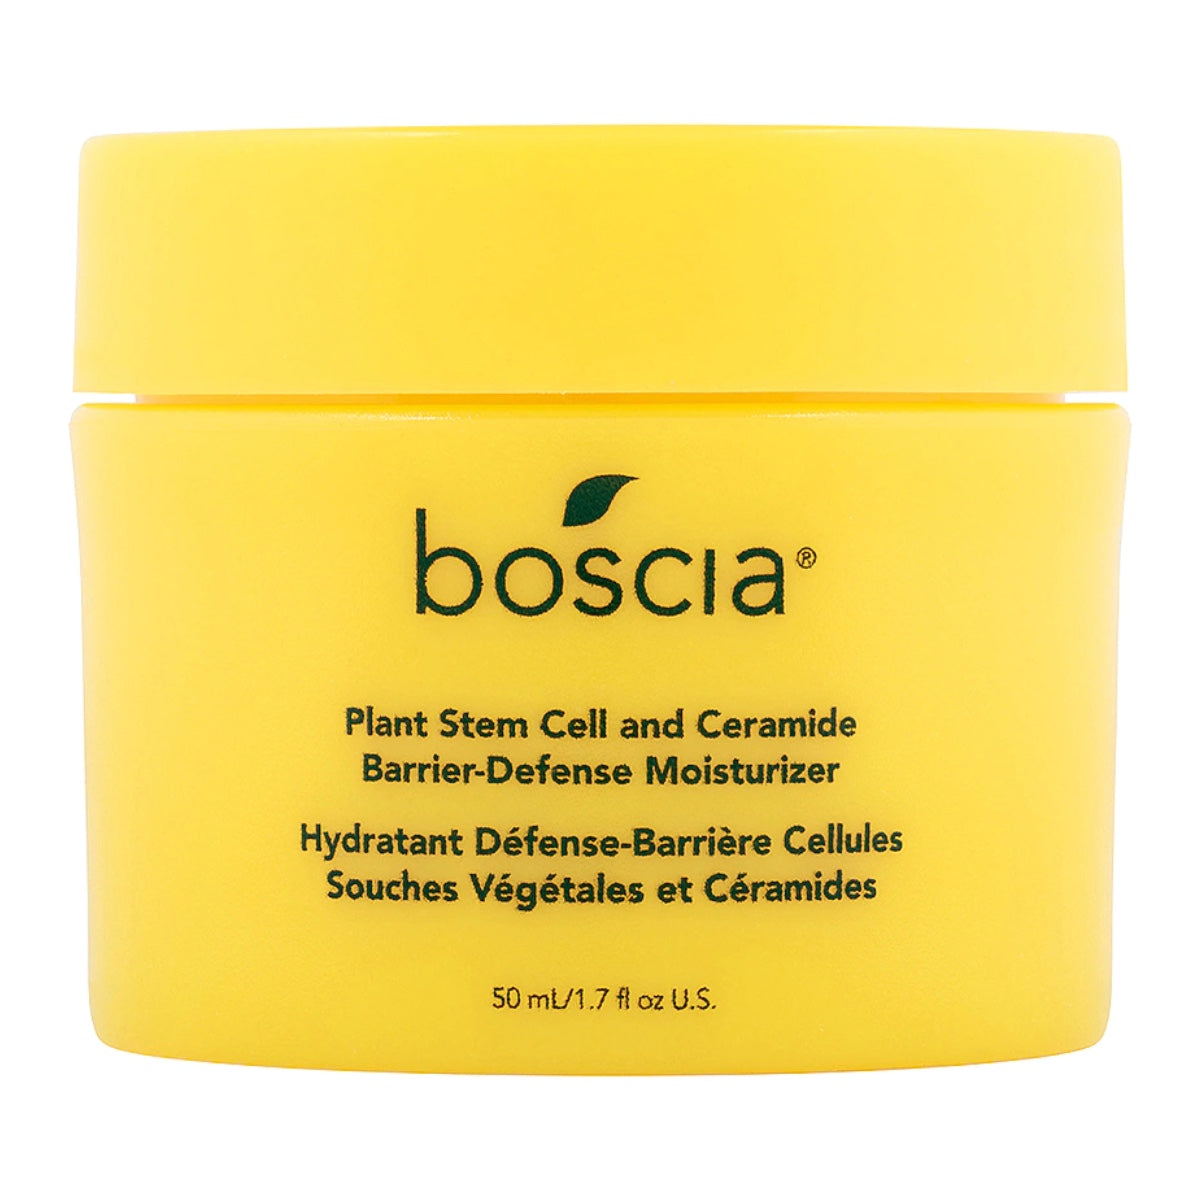 [05/24] Boscia Plant Stem Cell and Ceramide Barrier-Defense Moisturizer 50 ml